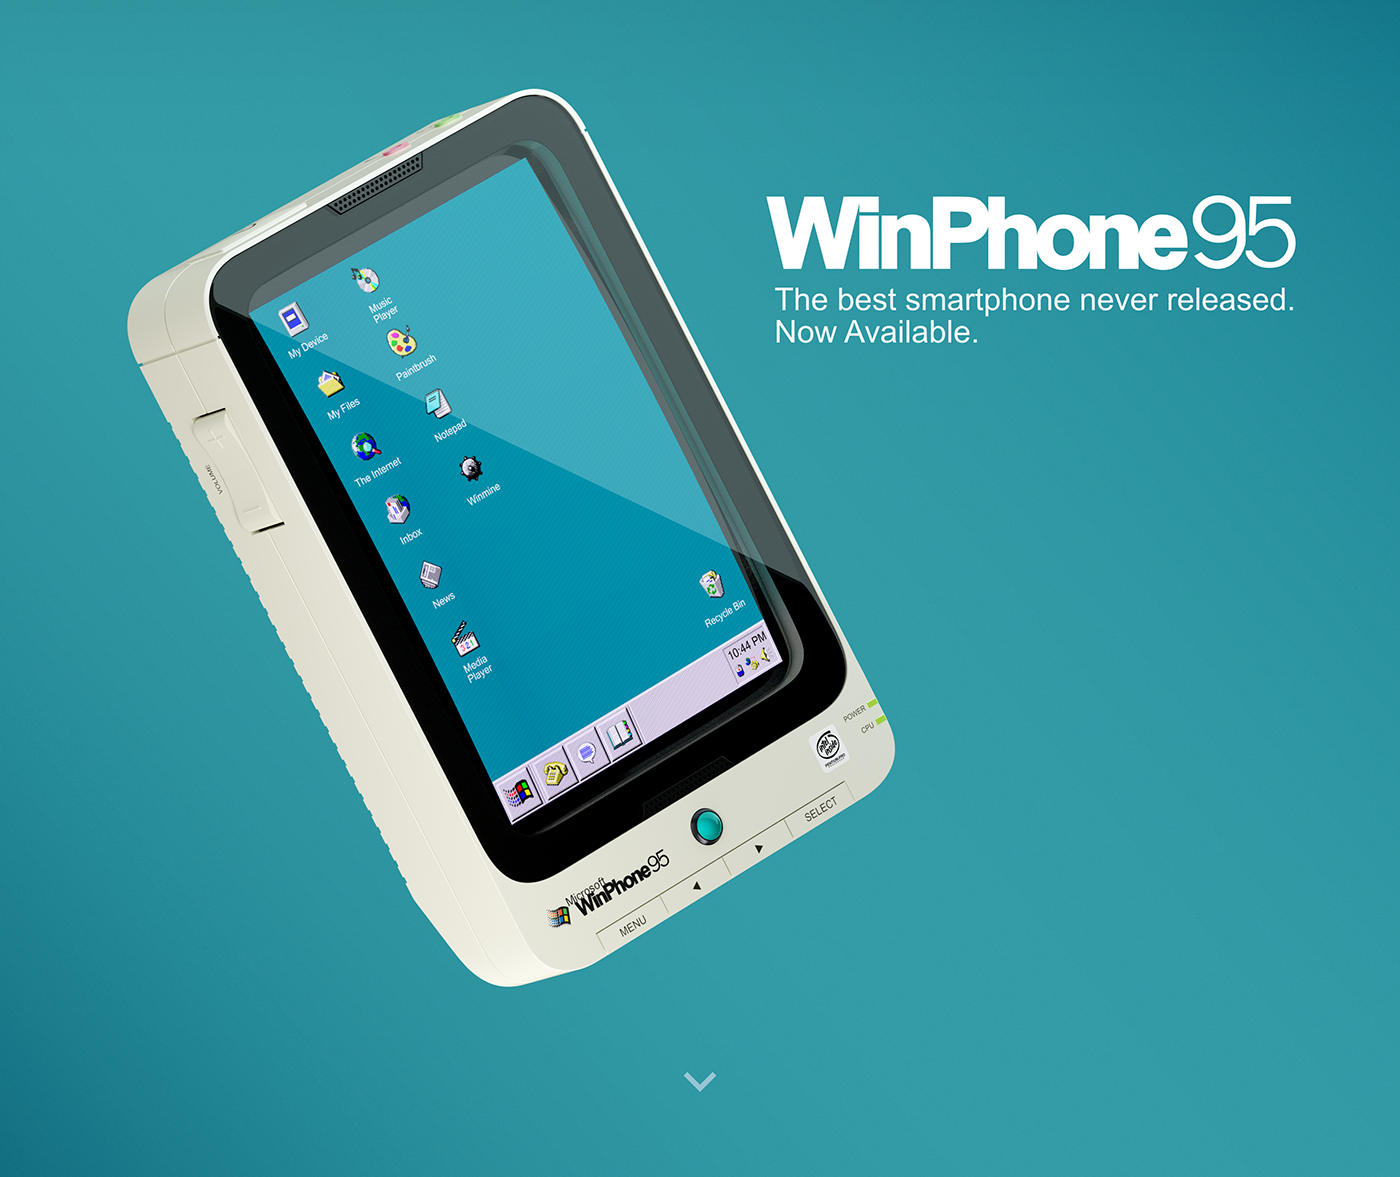 windows 95 windows phone windows Microsoft mobile UI 3D smartphone nostalgic Retro